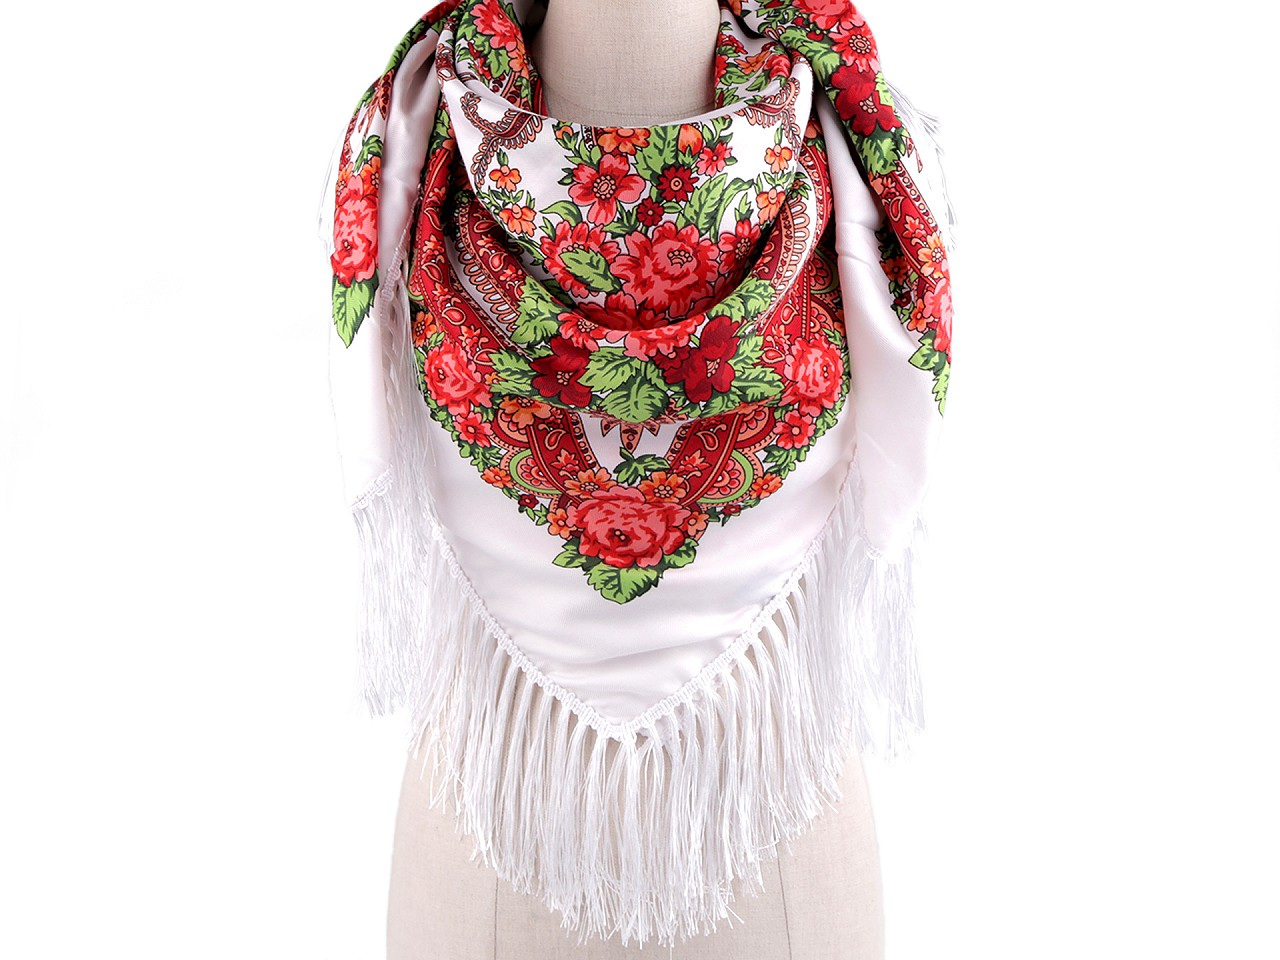 Šátek folklór květy s třásněmi 105x105 cm, barva 1 bílá